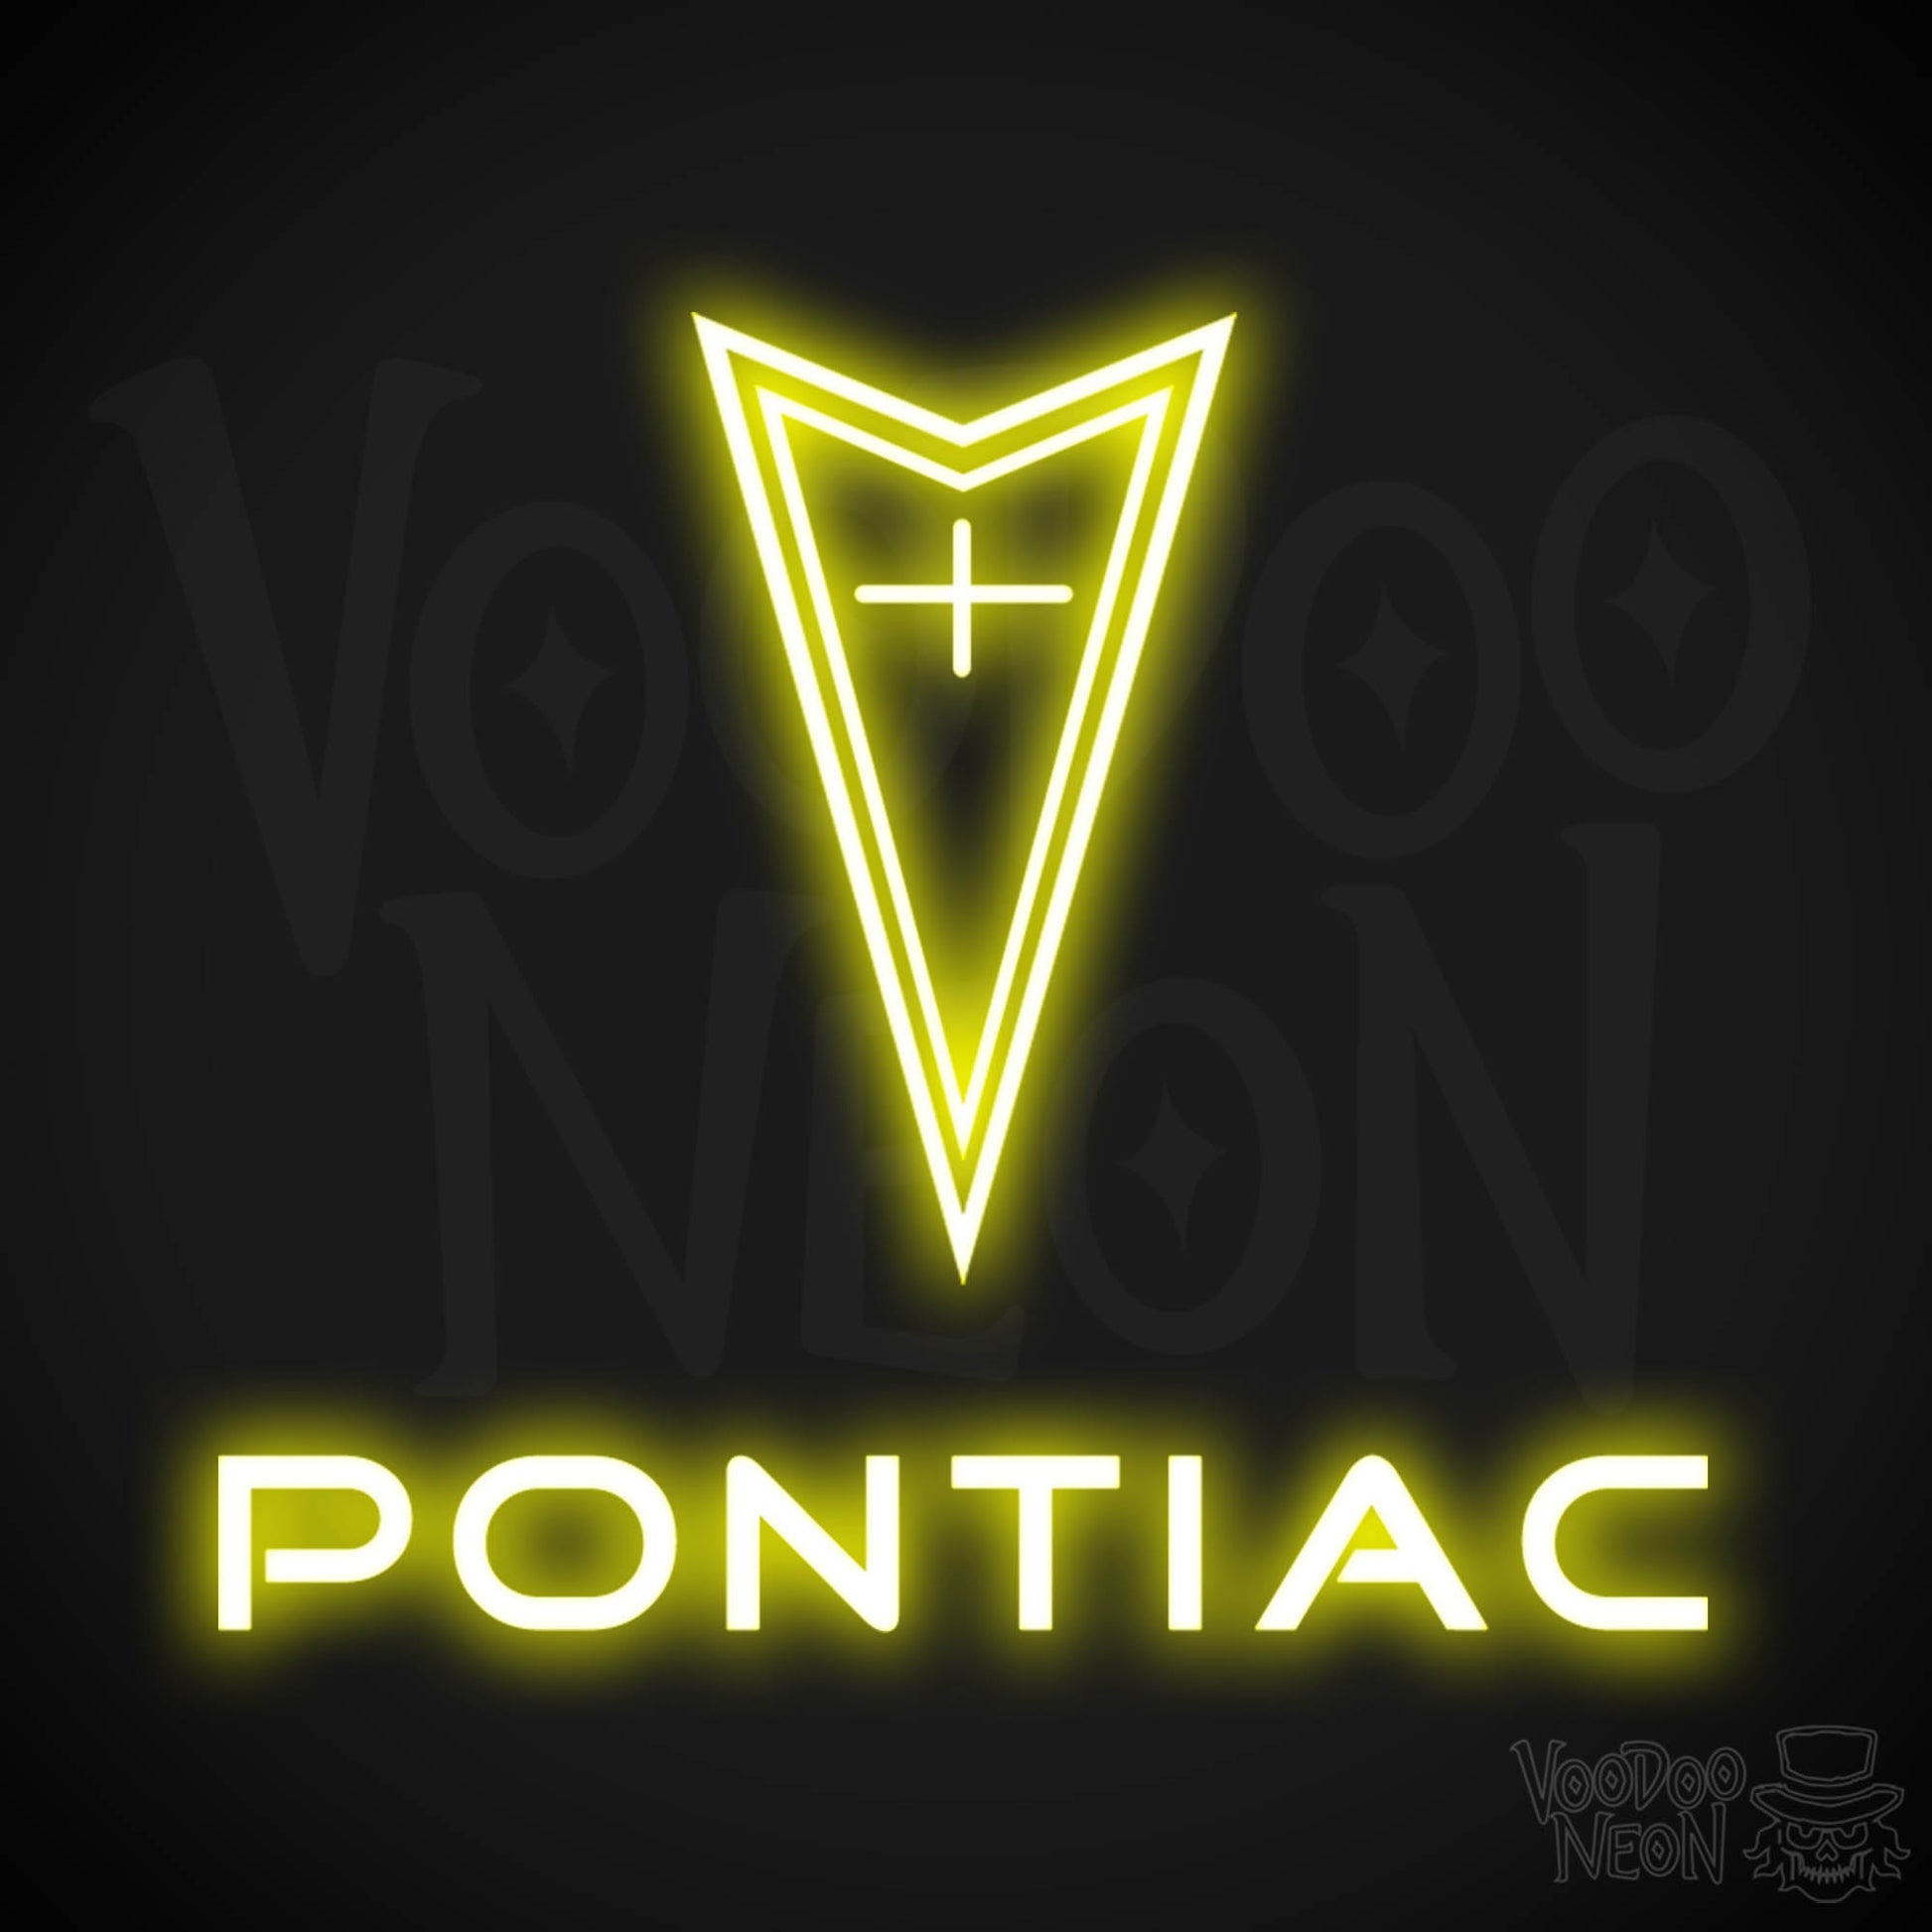 Pontiac Neon Sign - Pontiac Sign - Pontiac Decor - Wall Art - Color Yellow